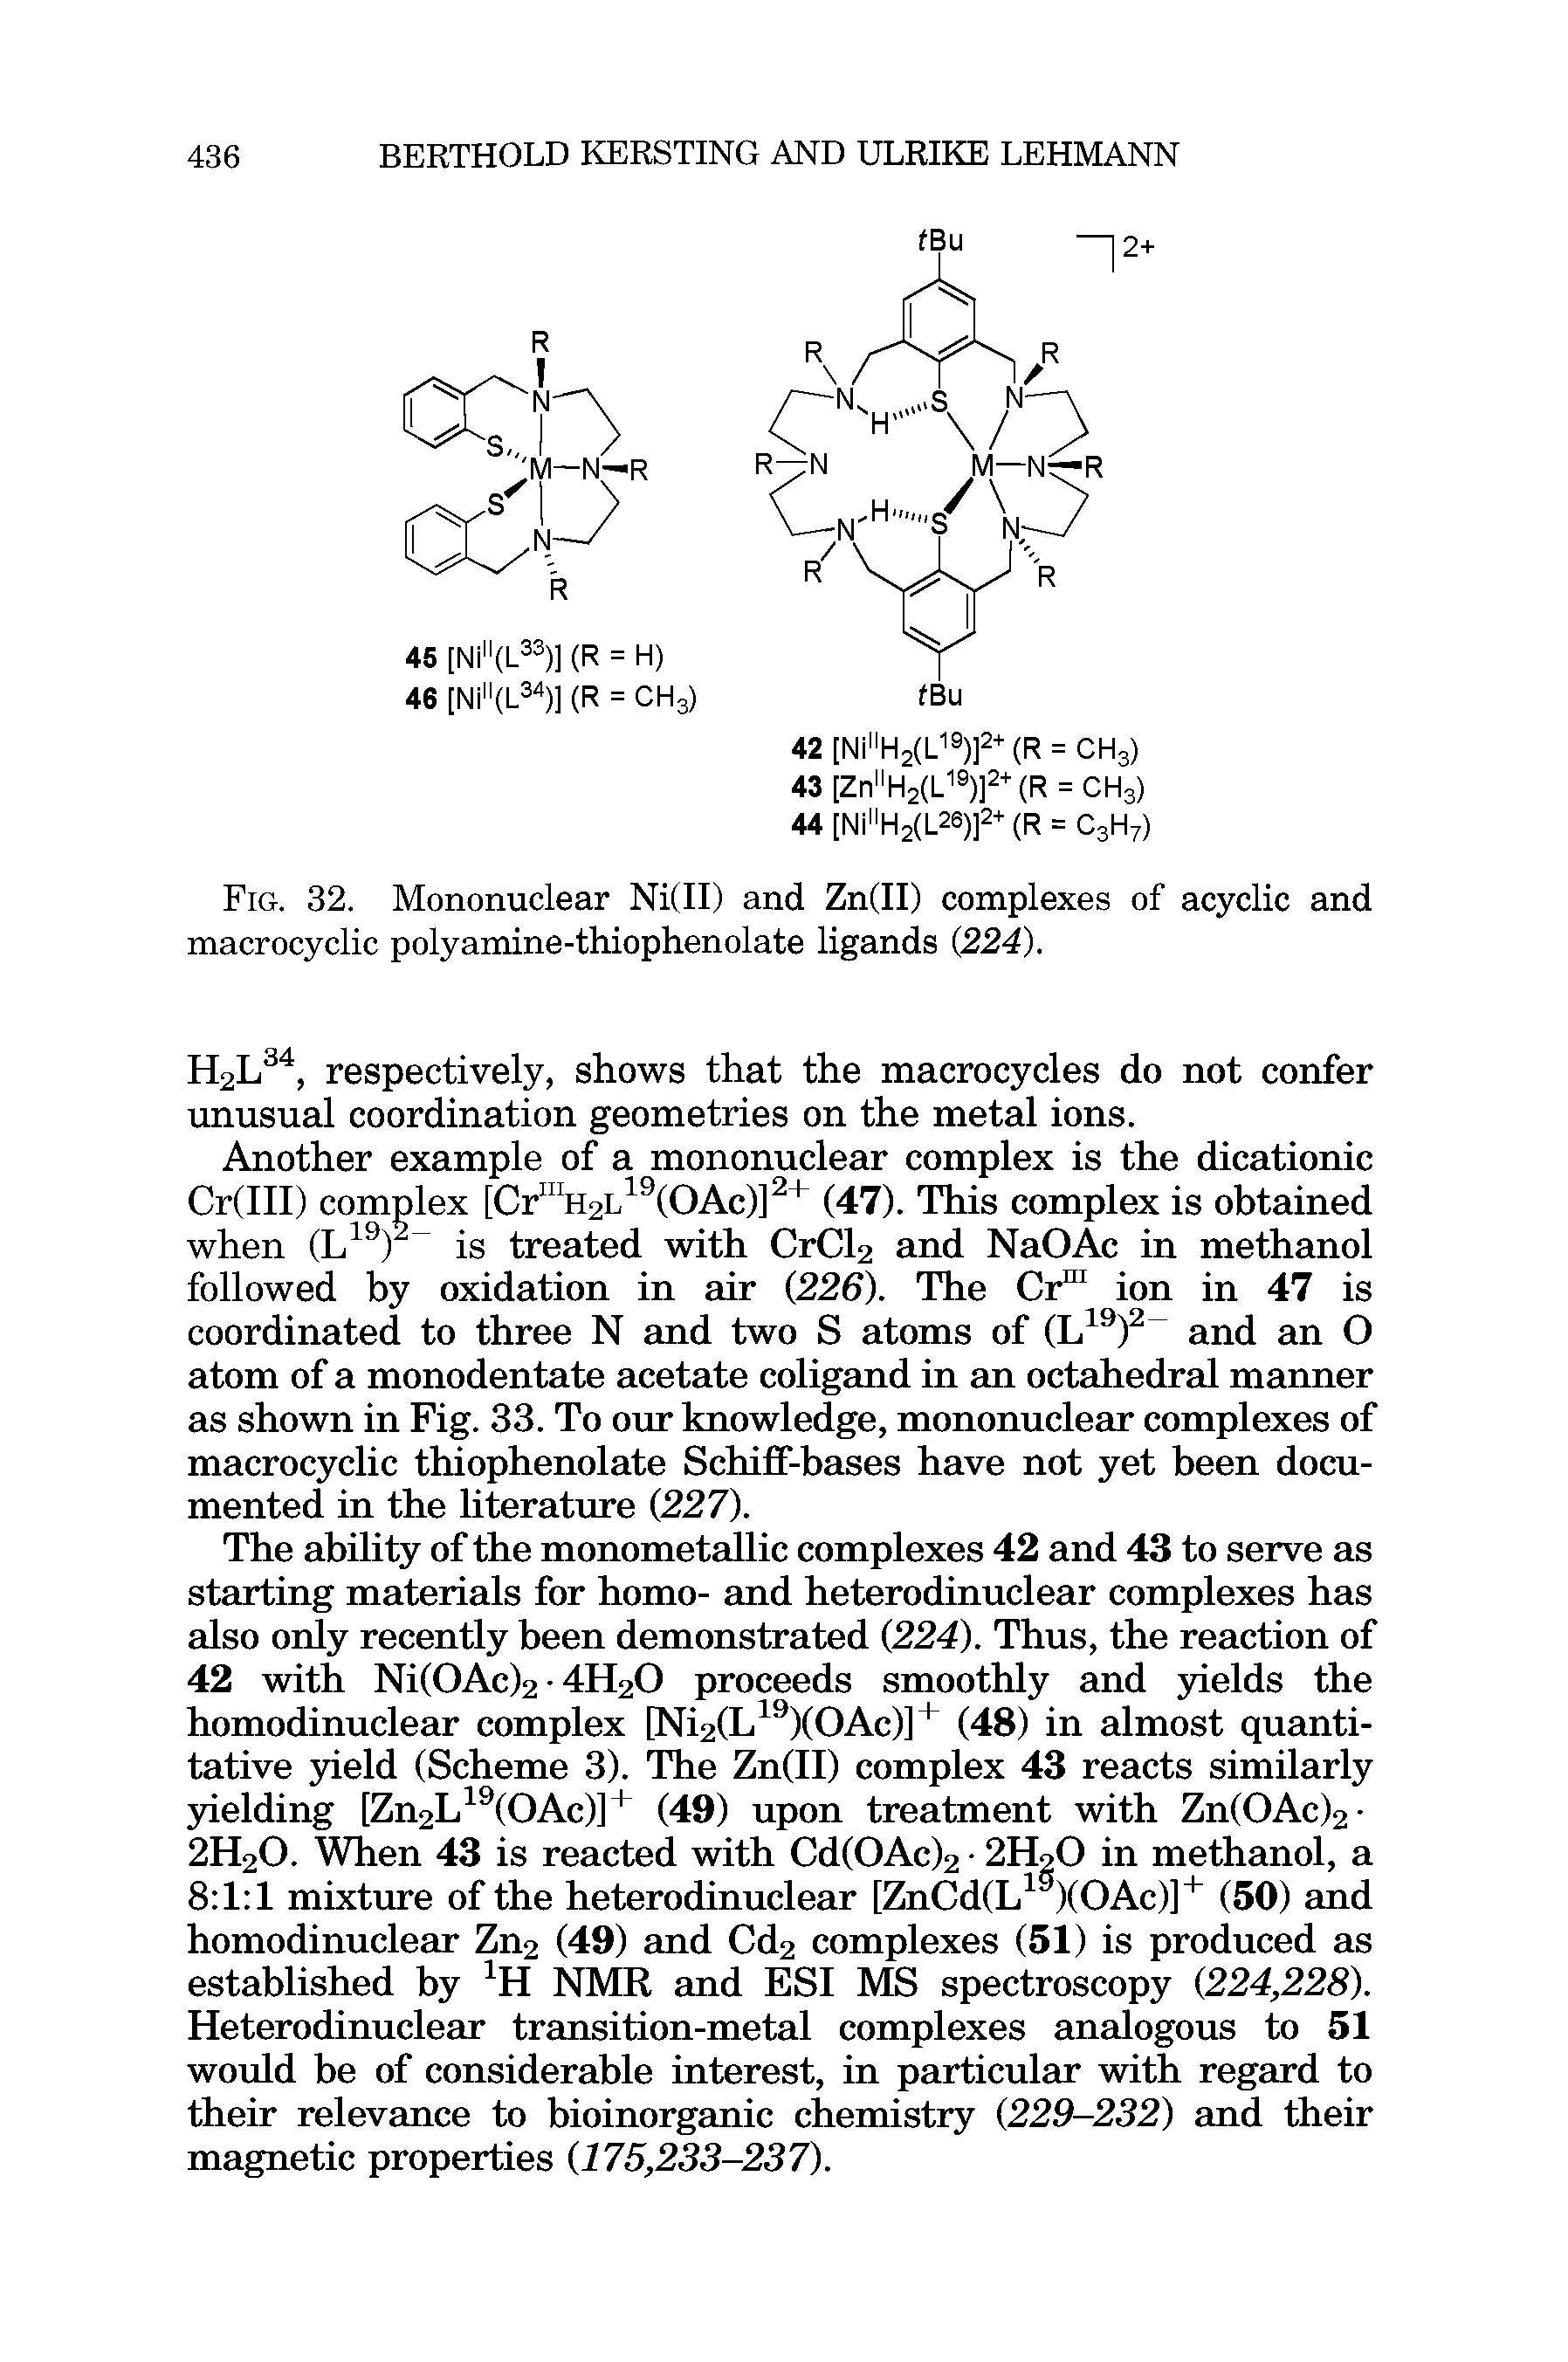 Fig. 32. Mononuclear Ni(II) and Zn(II) complexes of acyclic and macrocyclic polyamine-thiophenolate ligands (224).